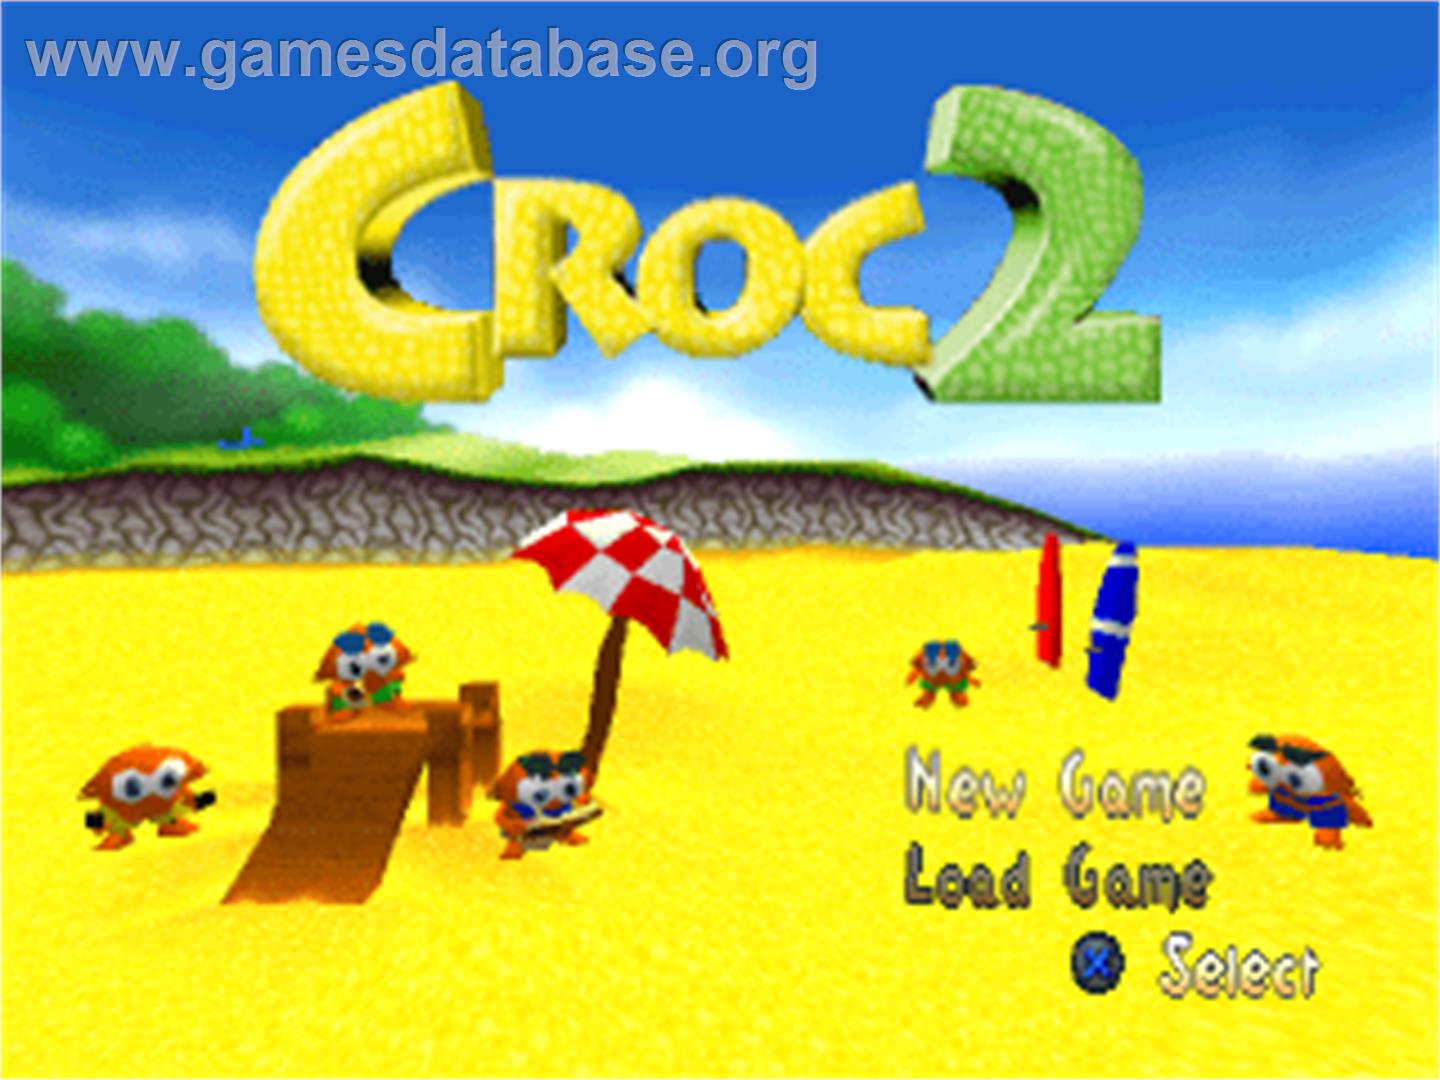 Croc 2 - Sony Playstation - Artwork - Title Screen